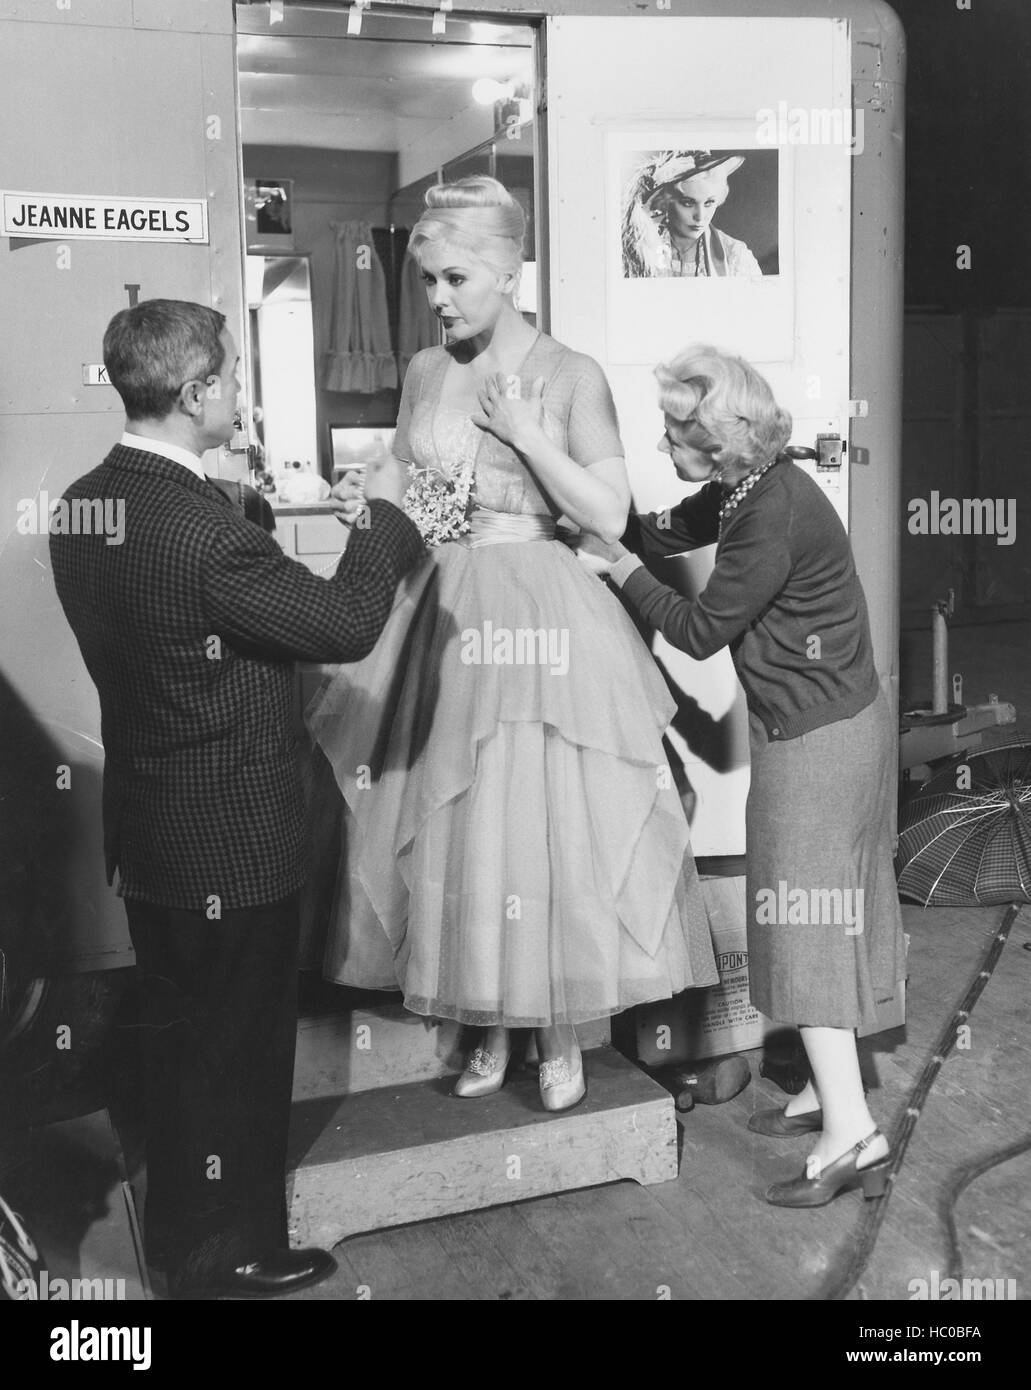 JEANNE EAGELS, chief designer Jean Louis, Kim Novak, assistant designer,  Elizabeth Courtney, checking the costume, 1957 Stock Photo - Alamy